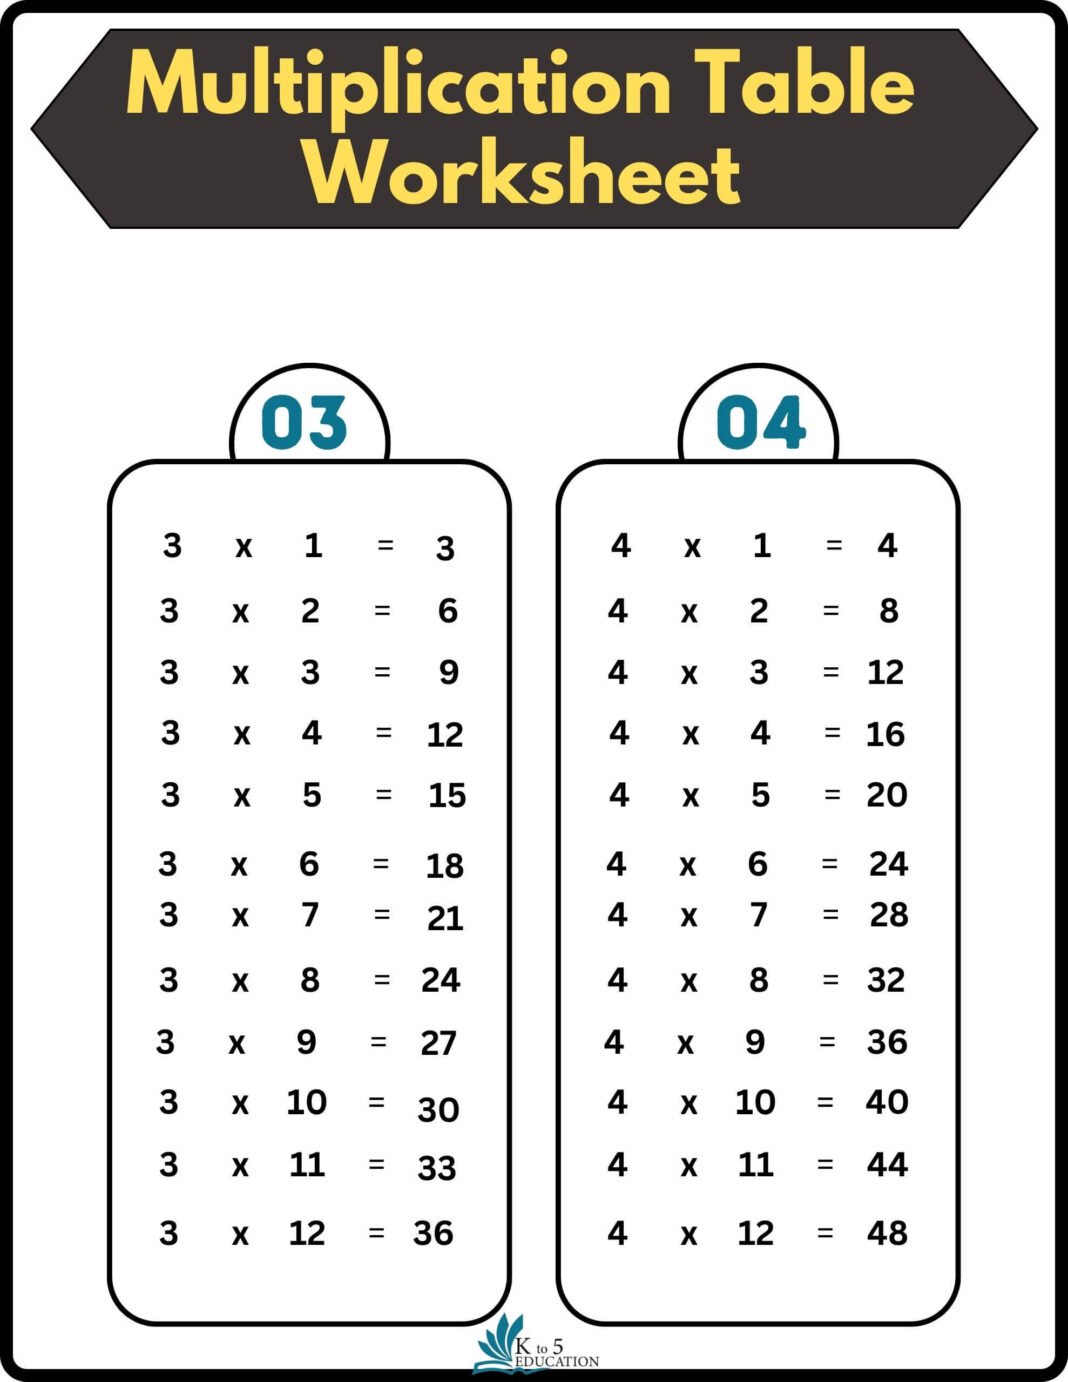 defect-estompa-teras-worksheets-multiplication-table-compliment-persistent-cump-r-tor